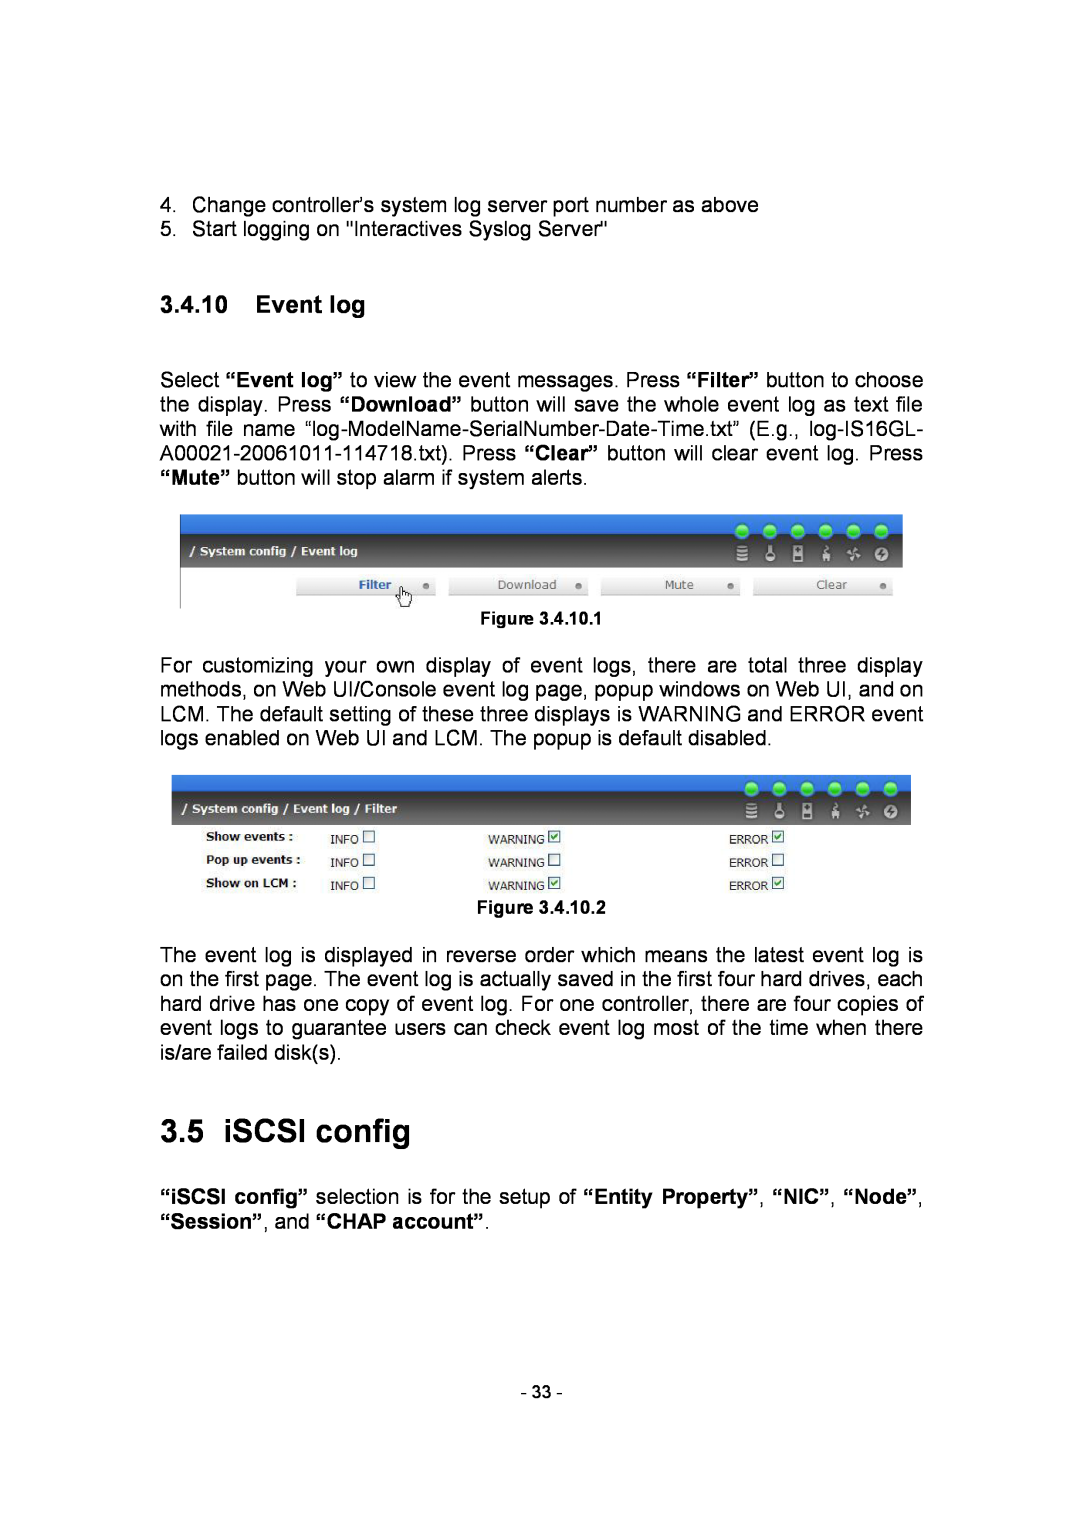 APC SCSI-SATA II manual iSCSI config, Event log 